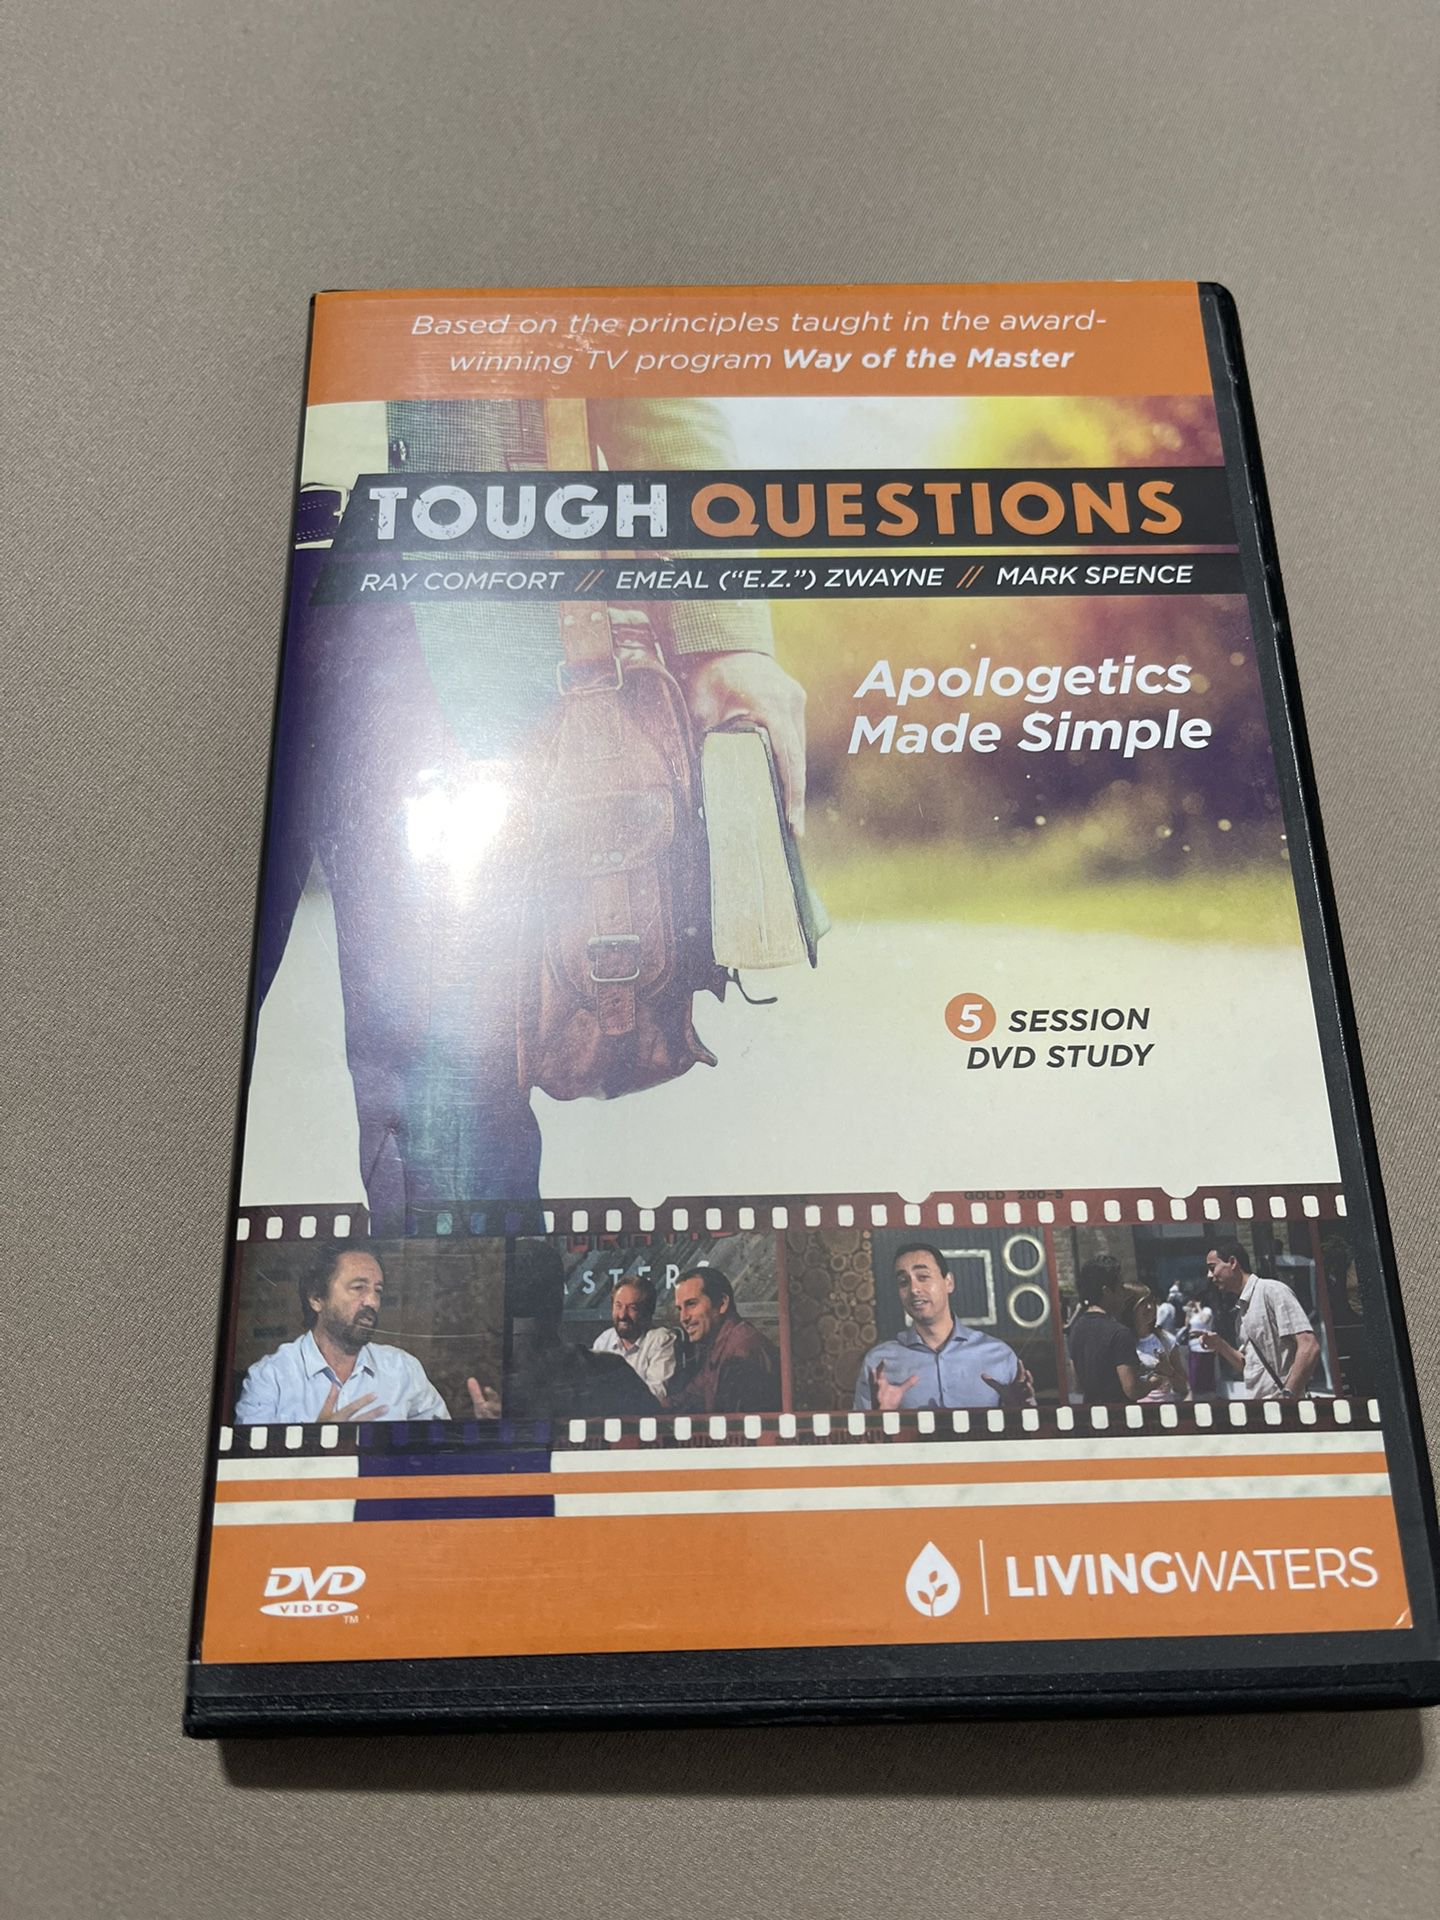 TOUGH QUESTIONS 5 Session DVD study plus MP4 download